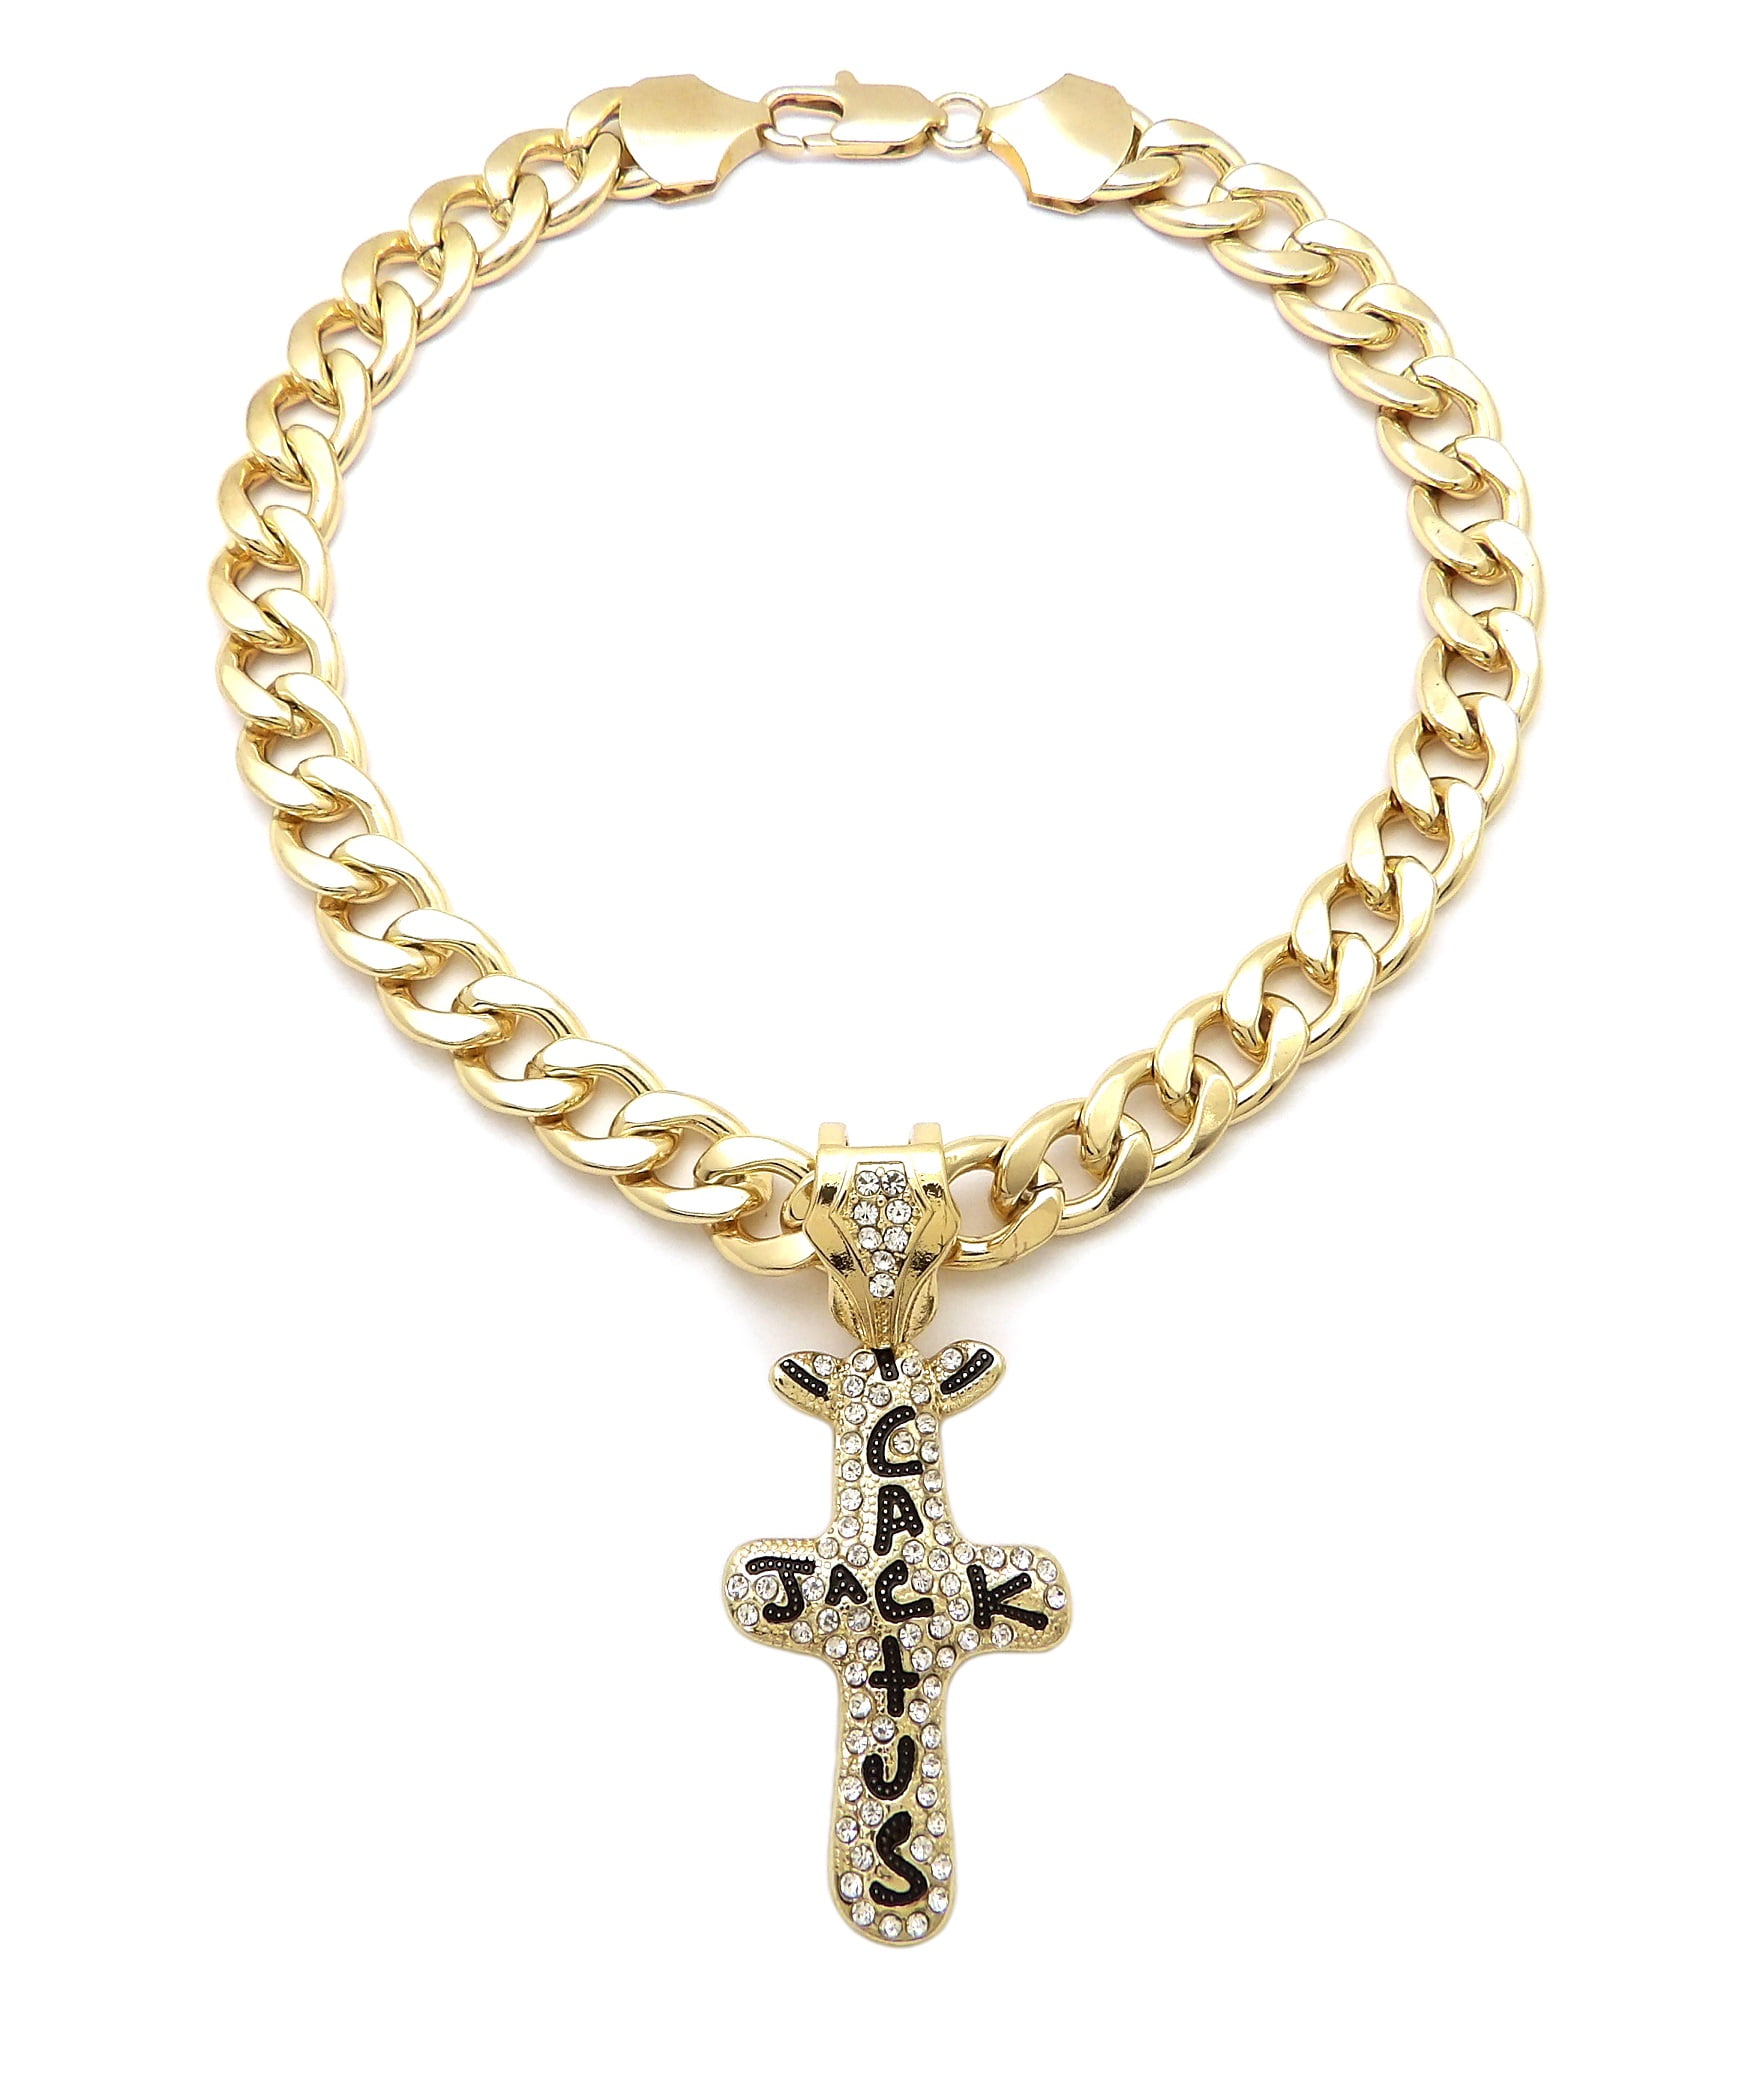 Travis Scott cactus jack pendant & necklace chain Gucci link chain now live  on https://www.bi… | Jewelry fashion trends, Jewelry accessories ideas,  Jewelry lookbook